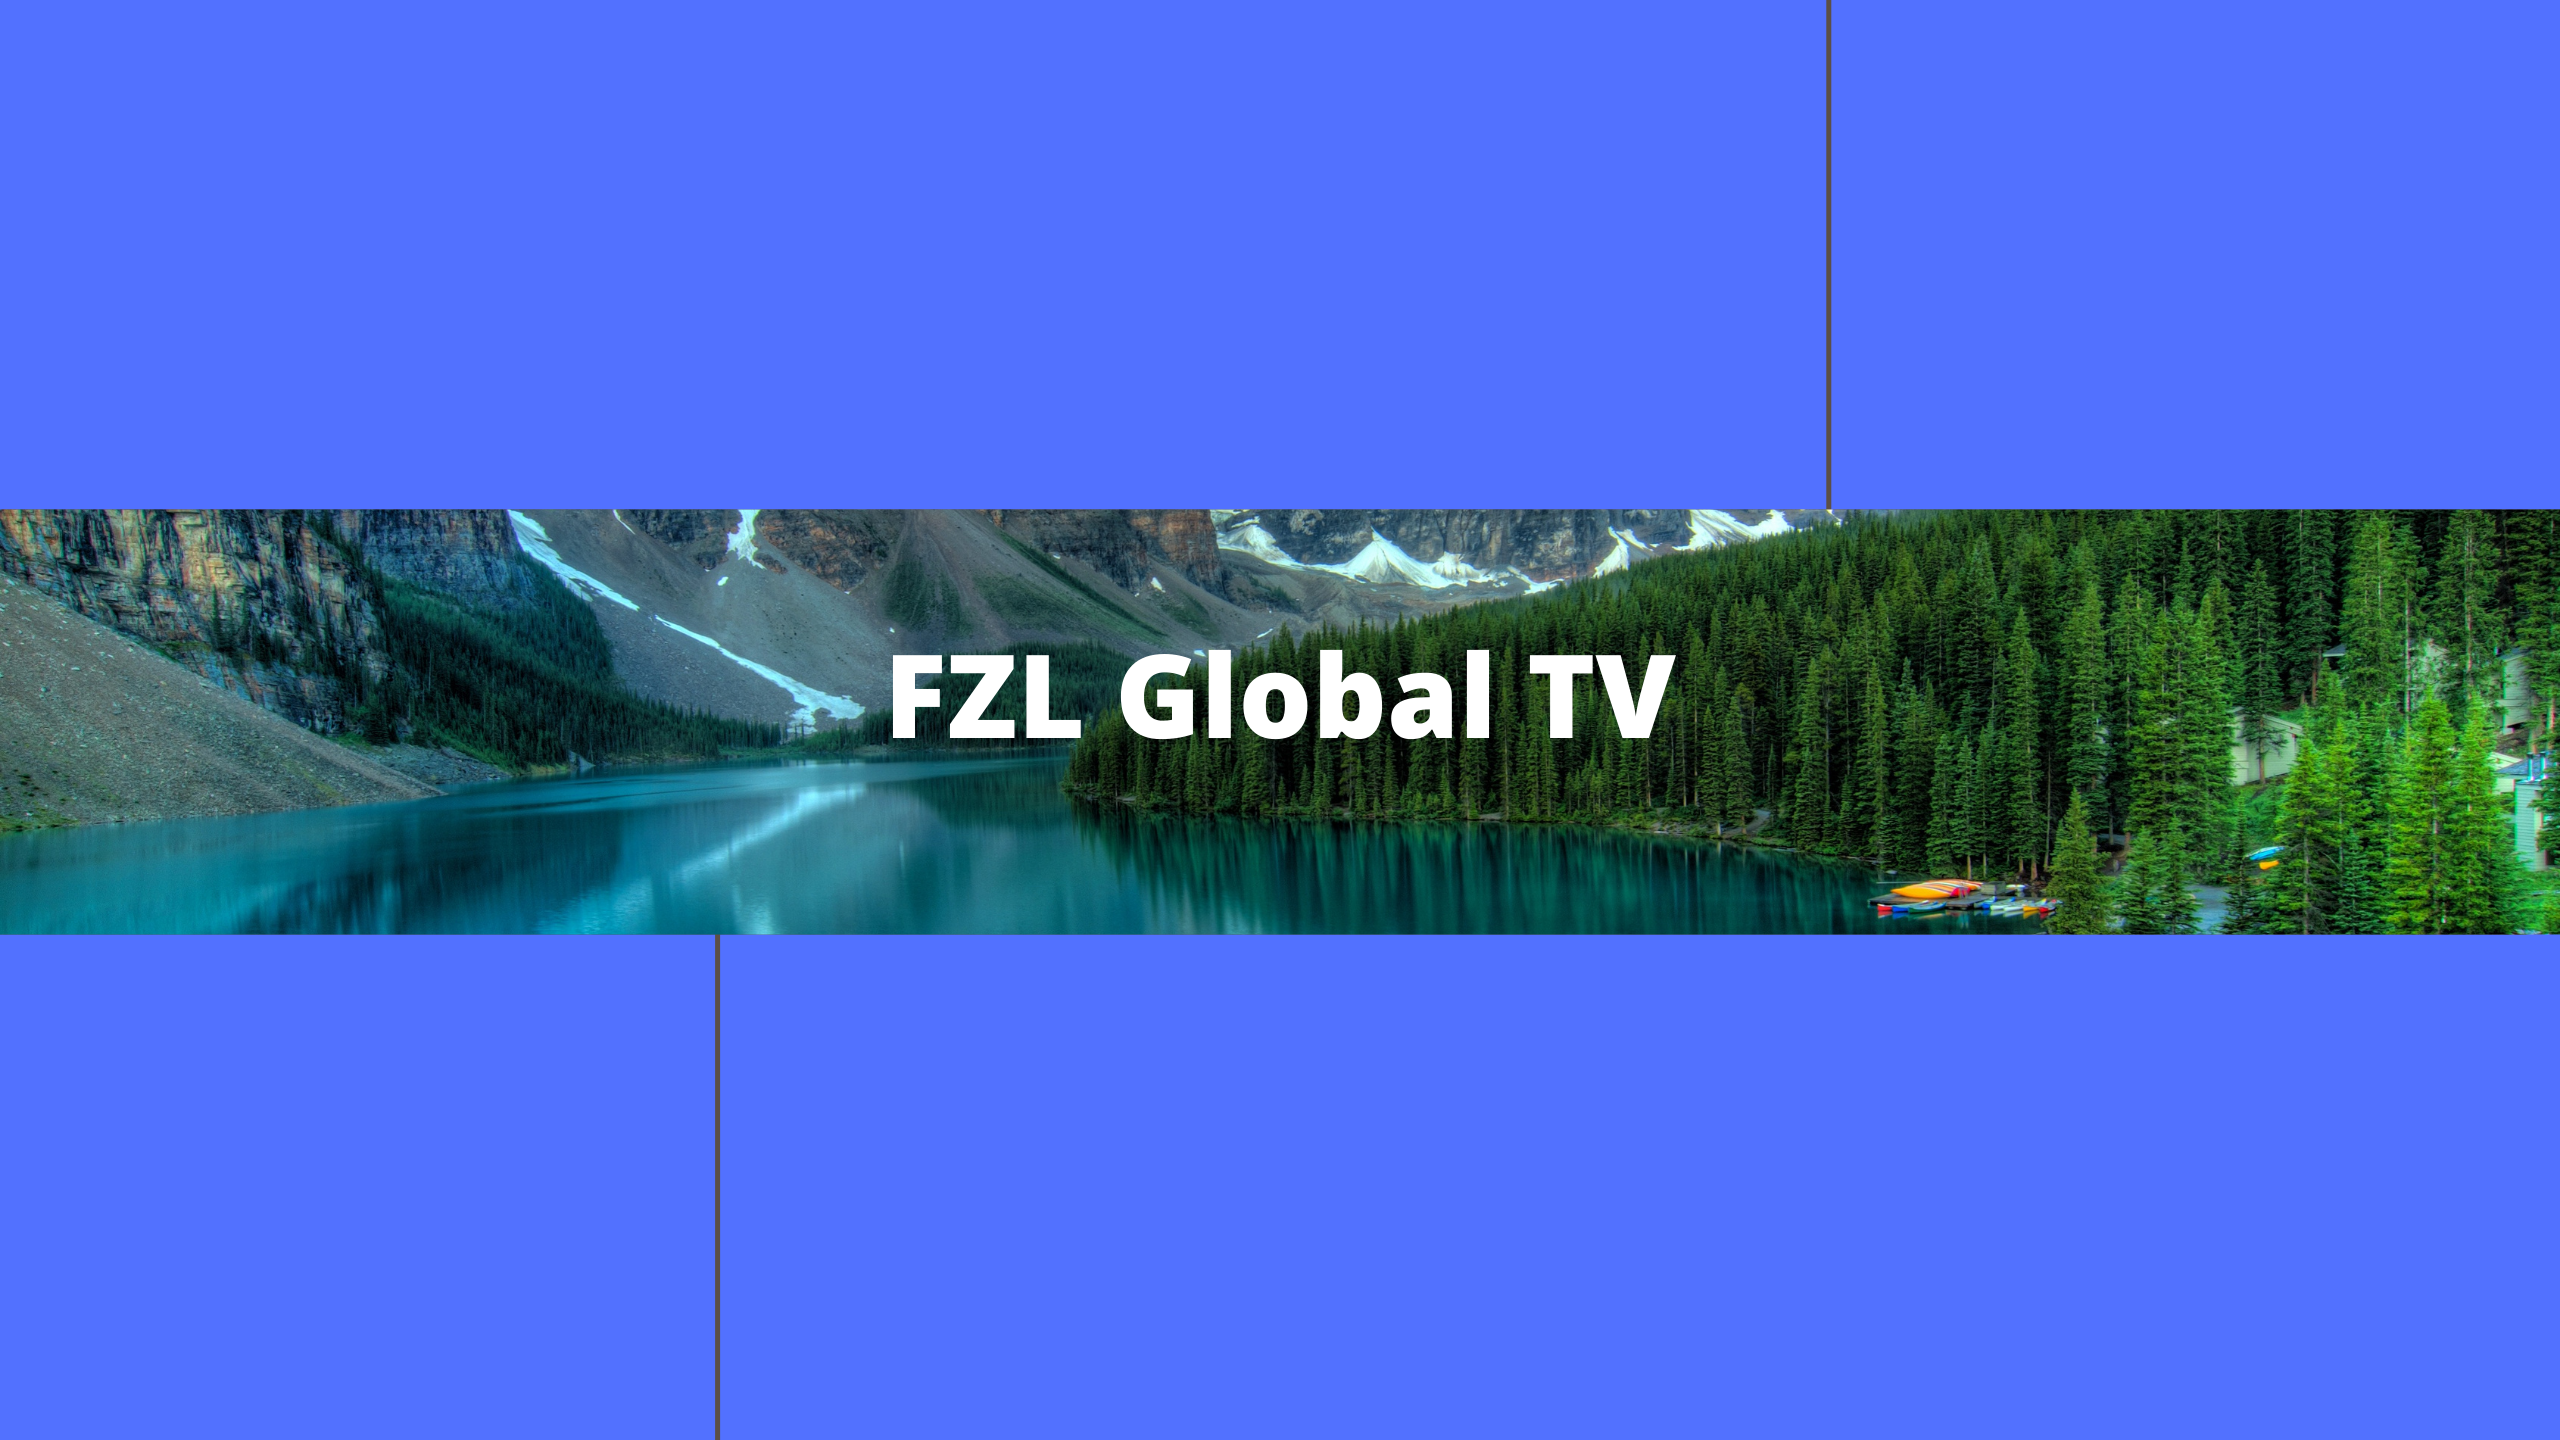 FZL Global TV